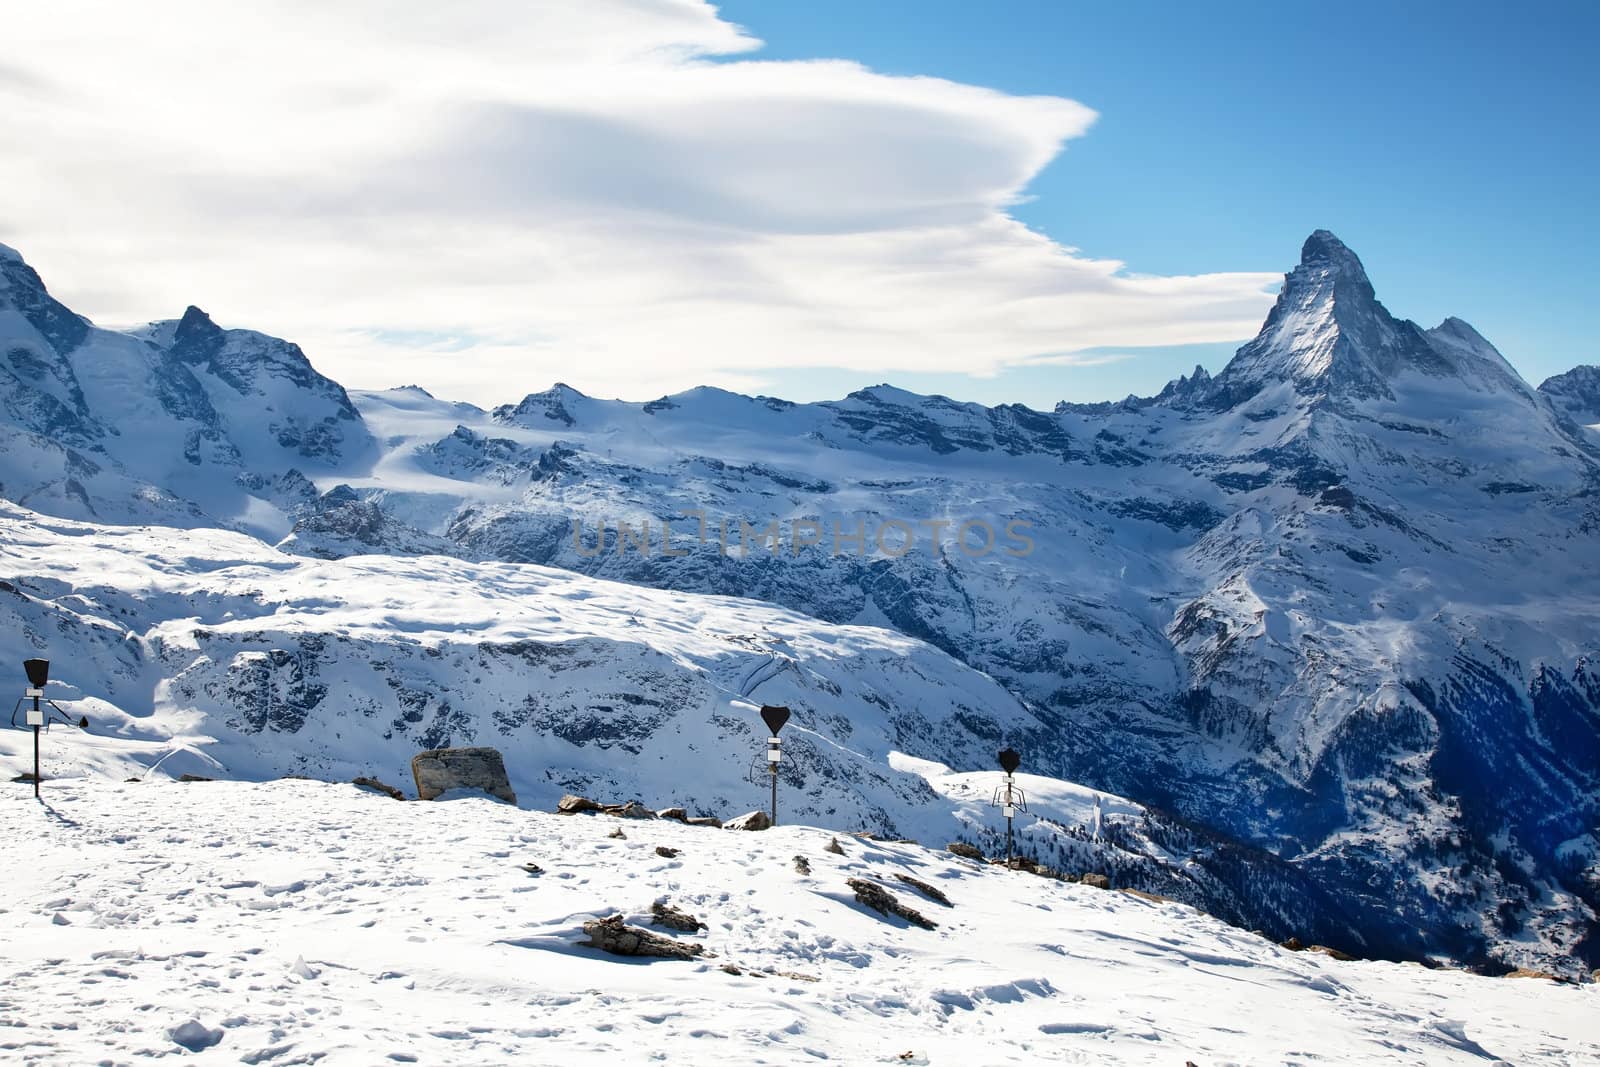 Matterhorn top in Zermatt Switzerland by RawGroup